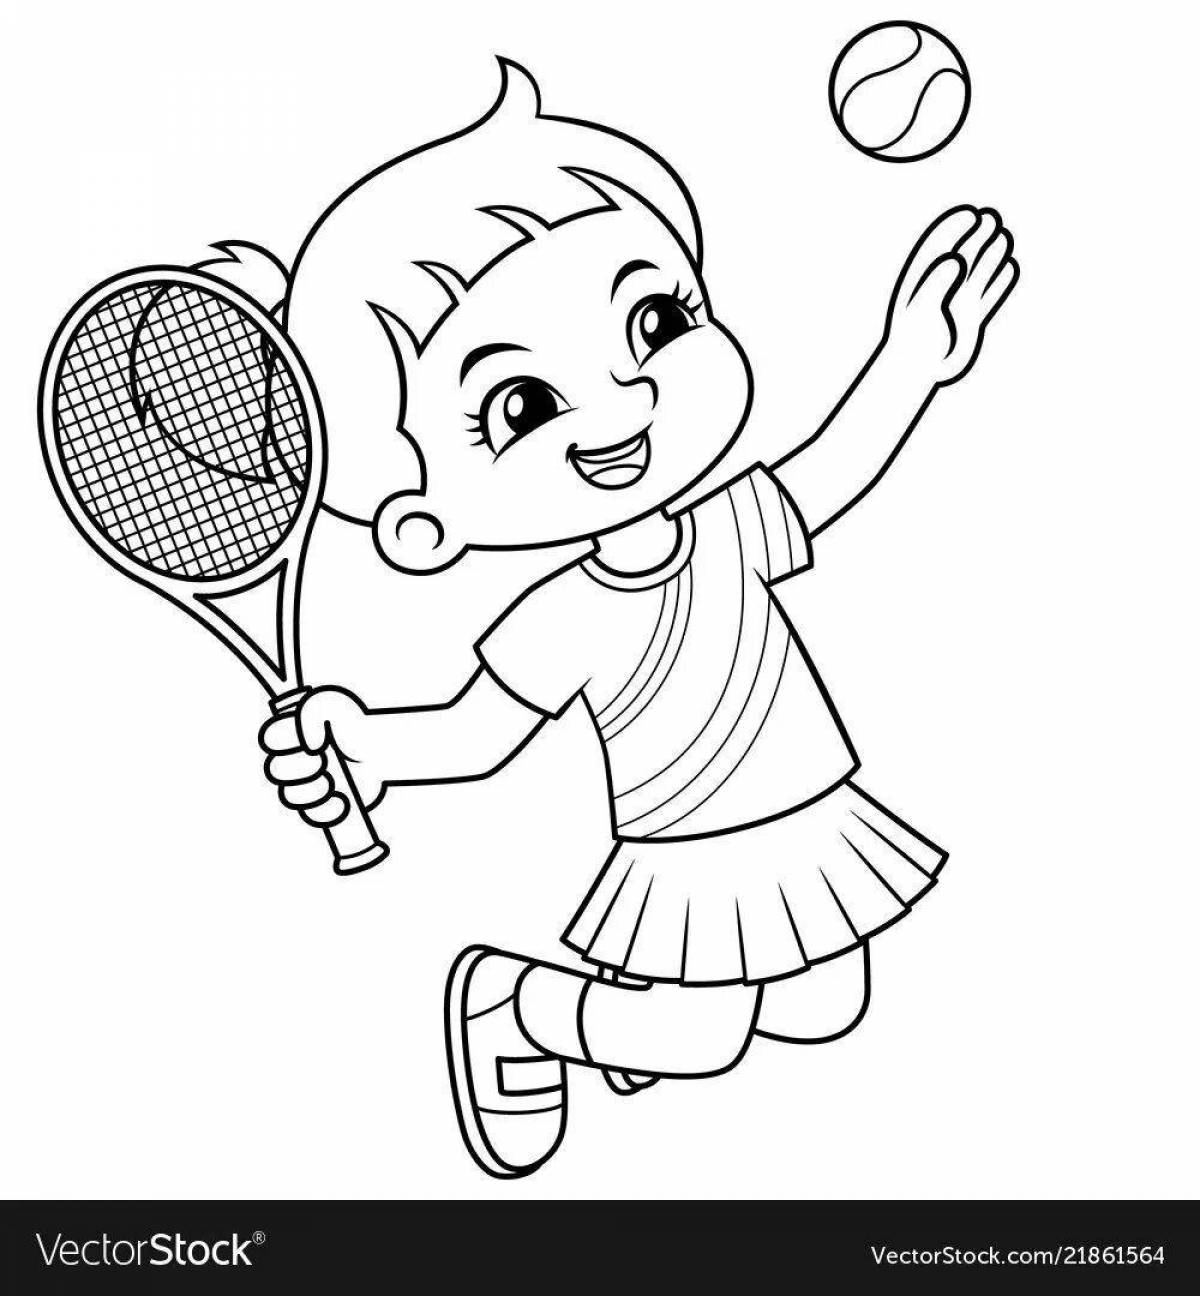 Теннис раскраска для детей - 77 фото